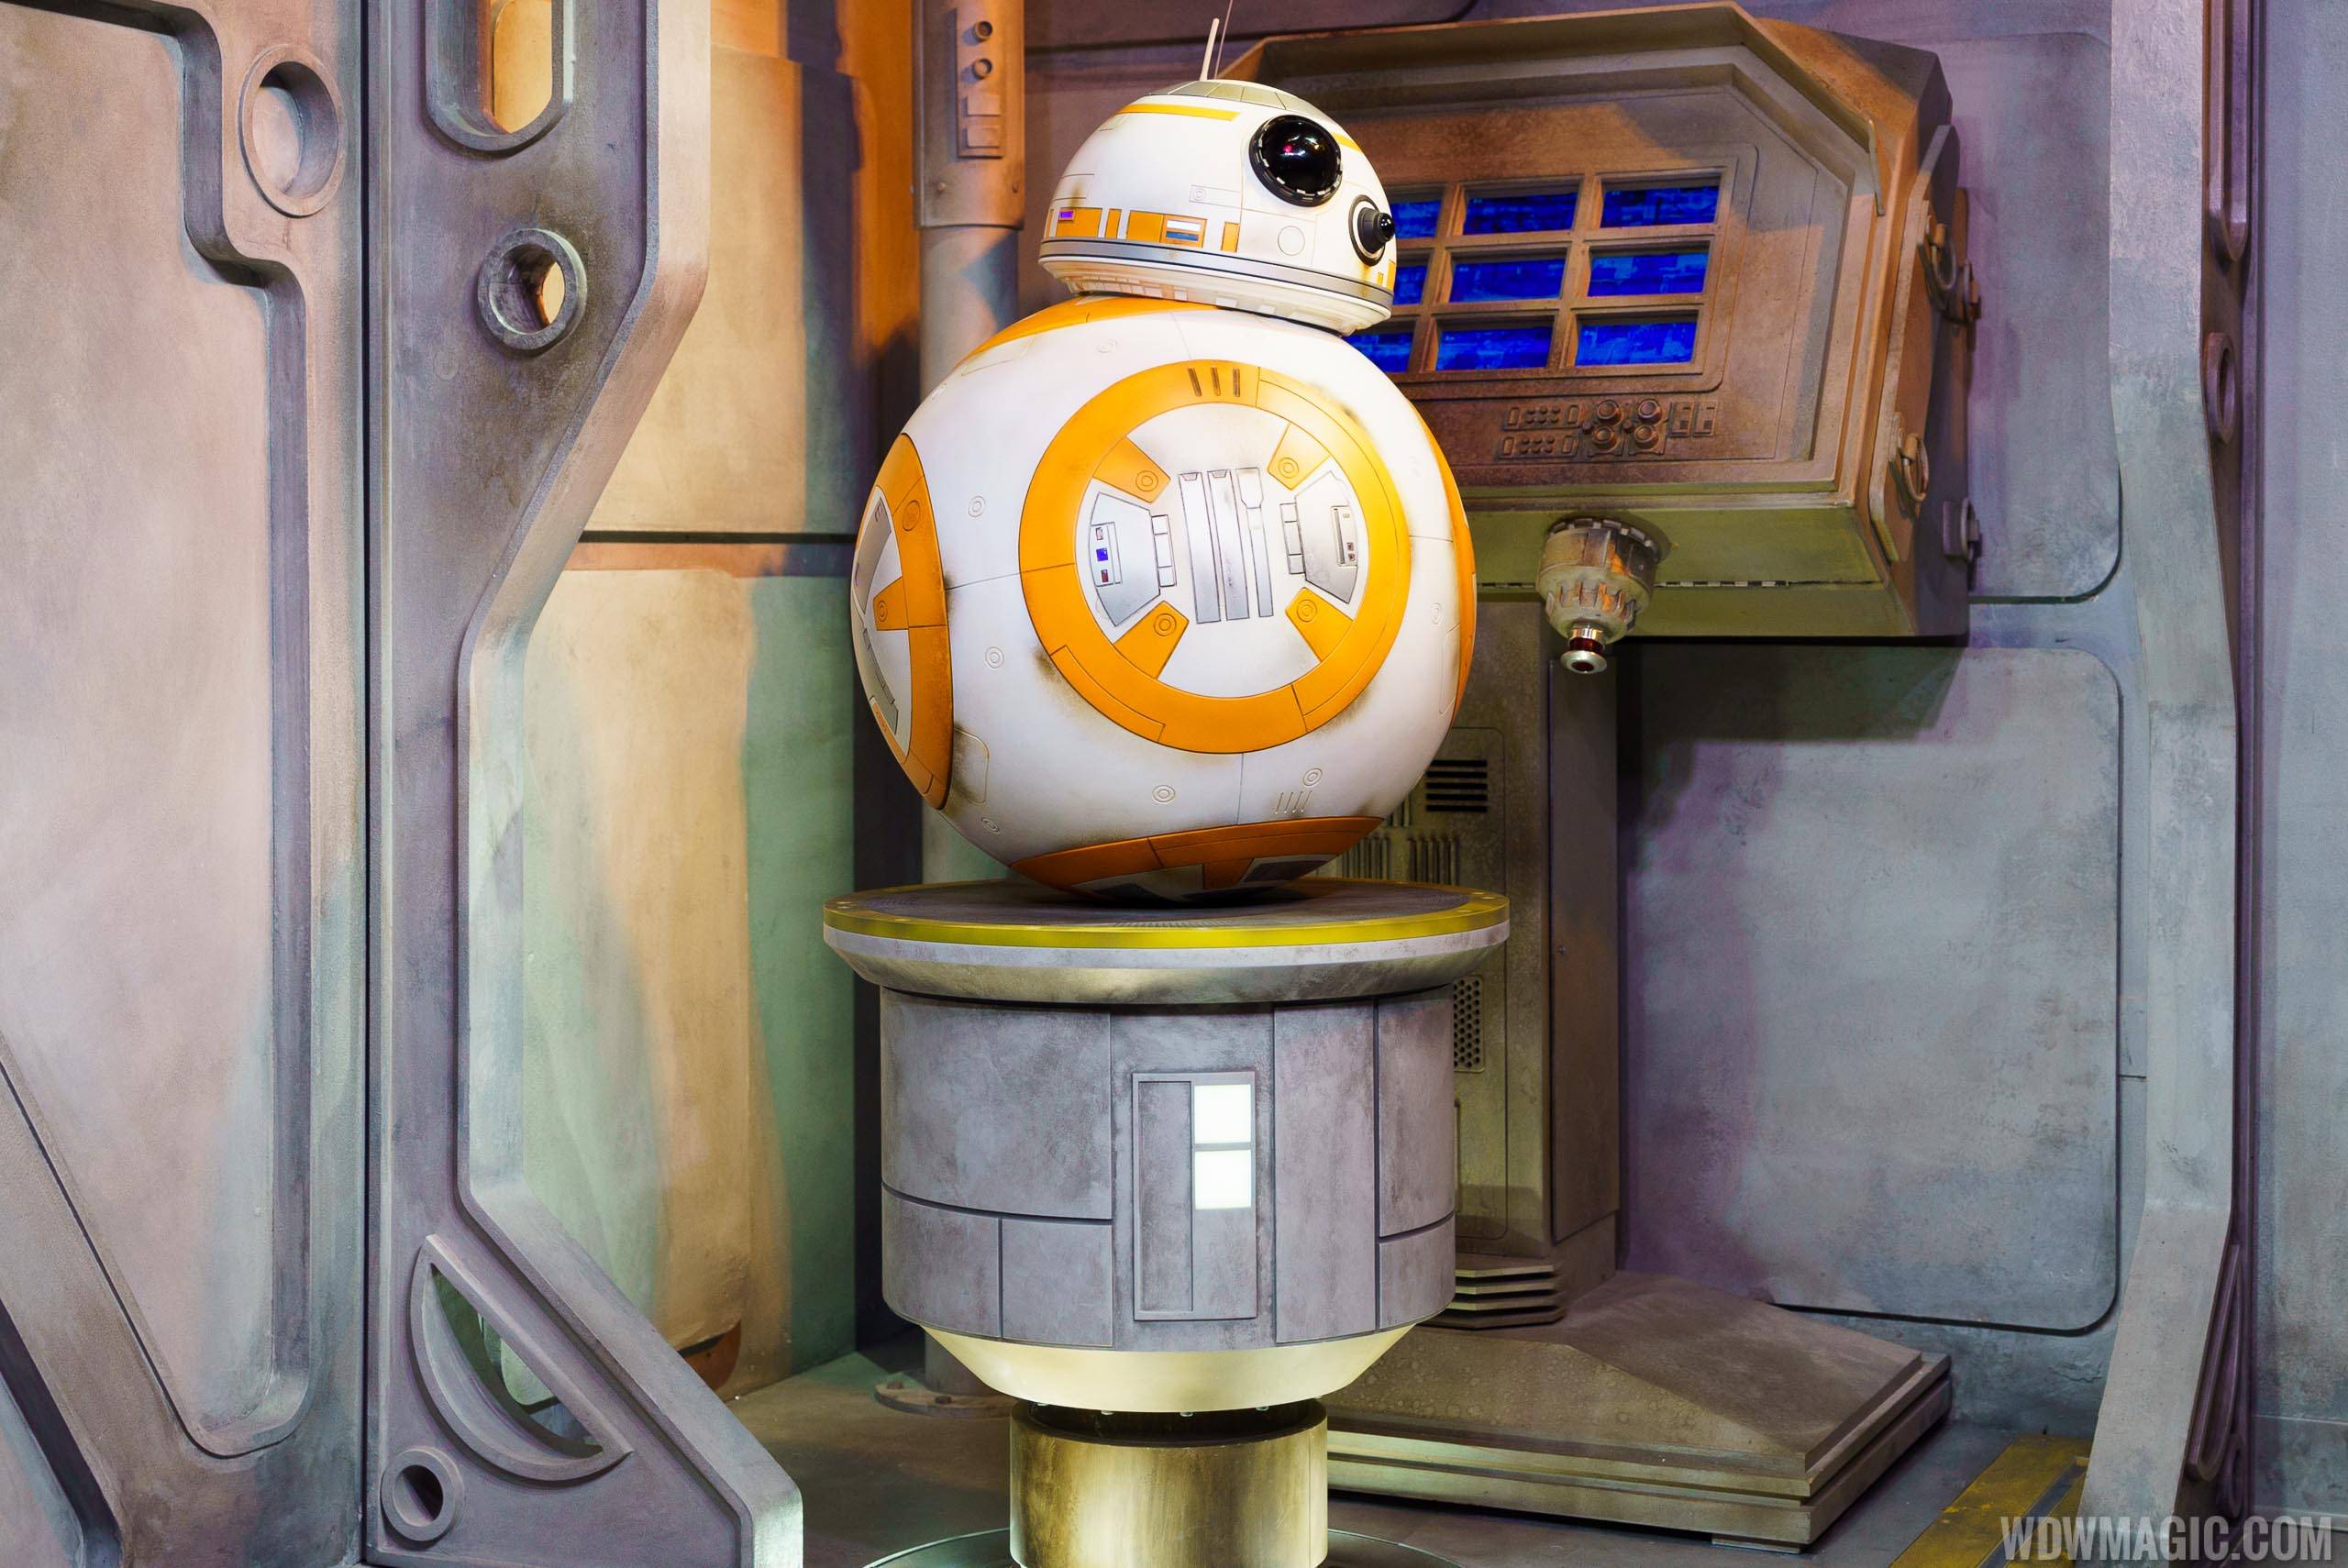 PHOTOS - BB-8 meet and greet now open at Disney's Hollywood Studios